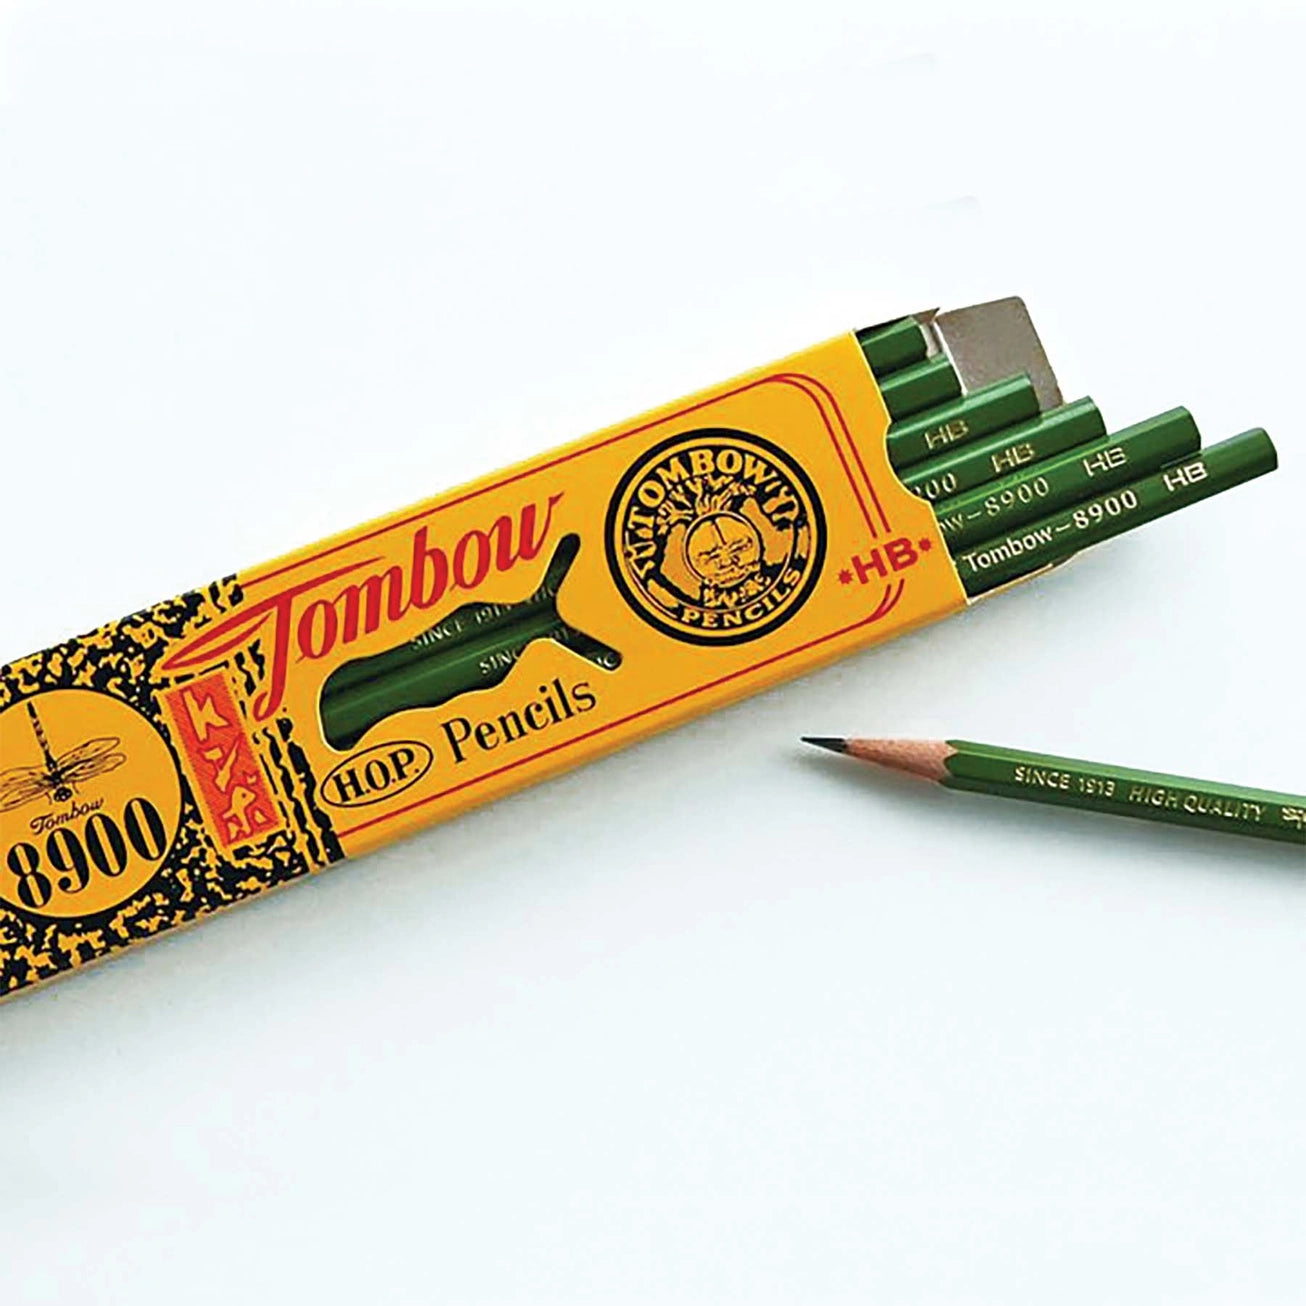 Tombow 8900 Drawing Pencils - 2B / Box